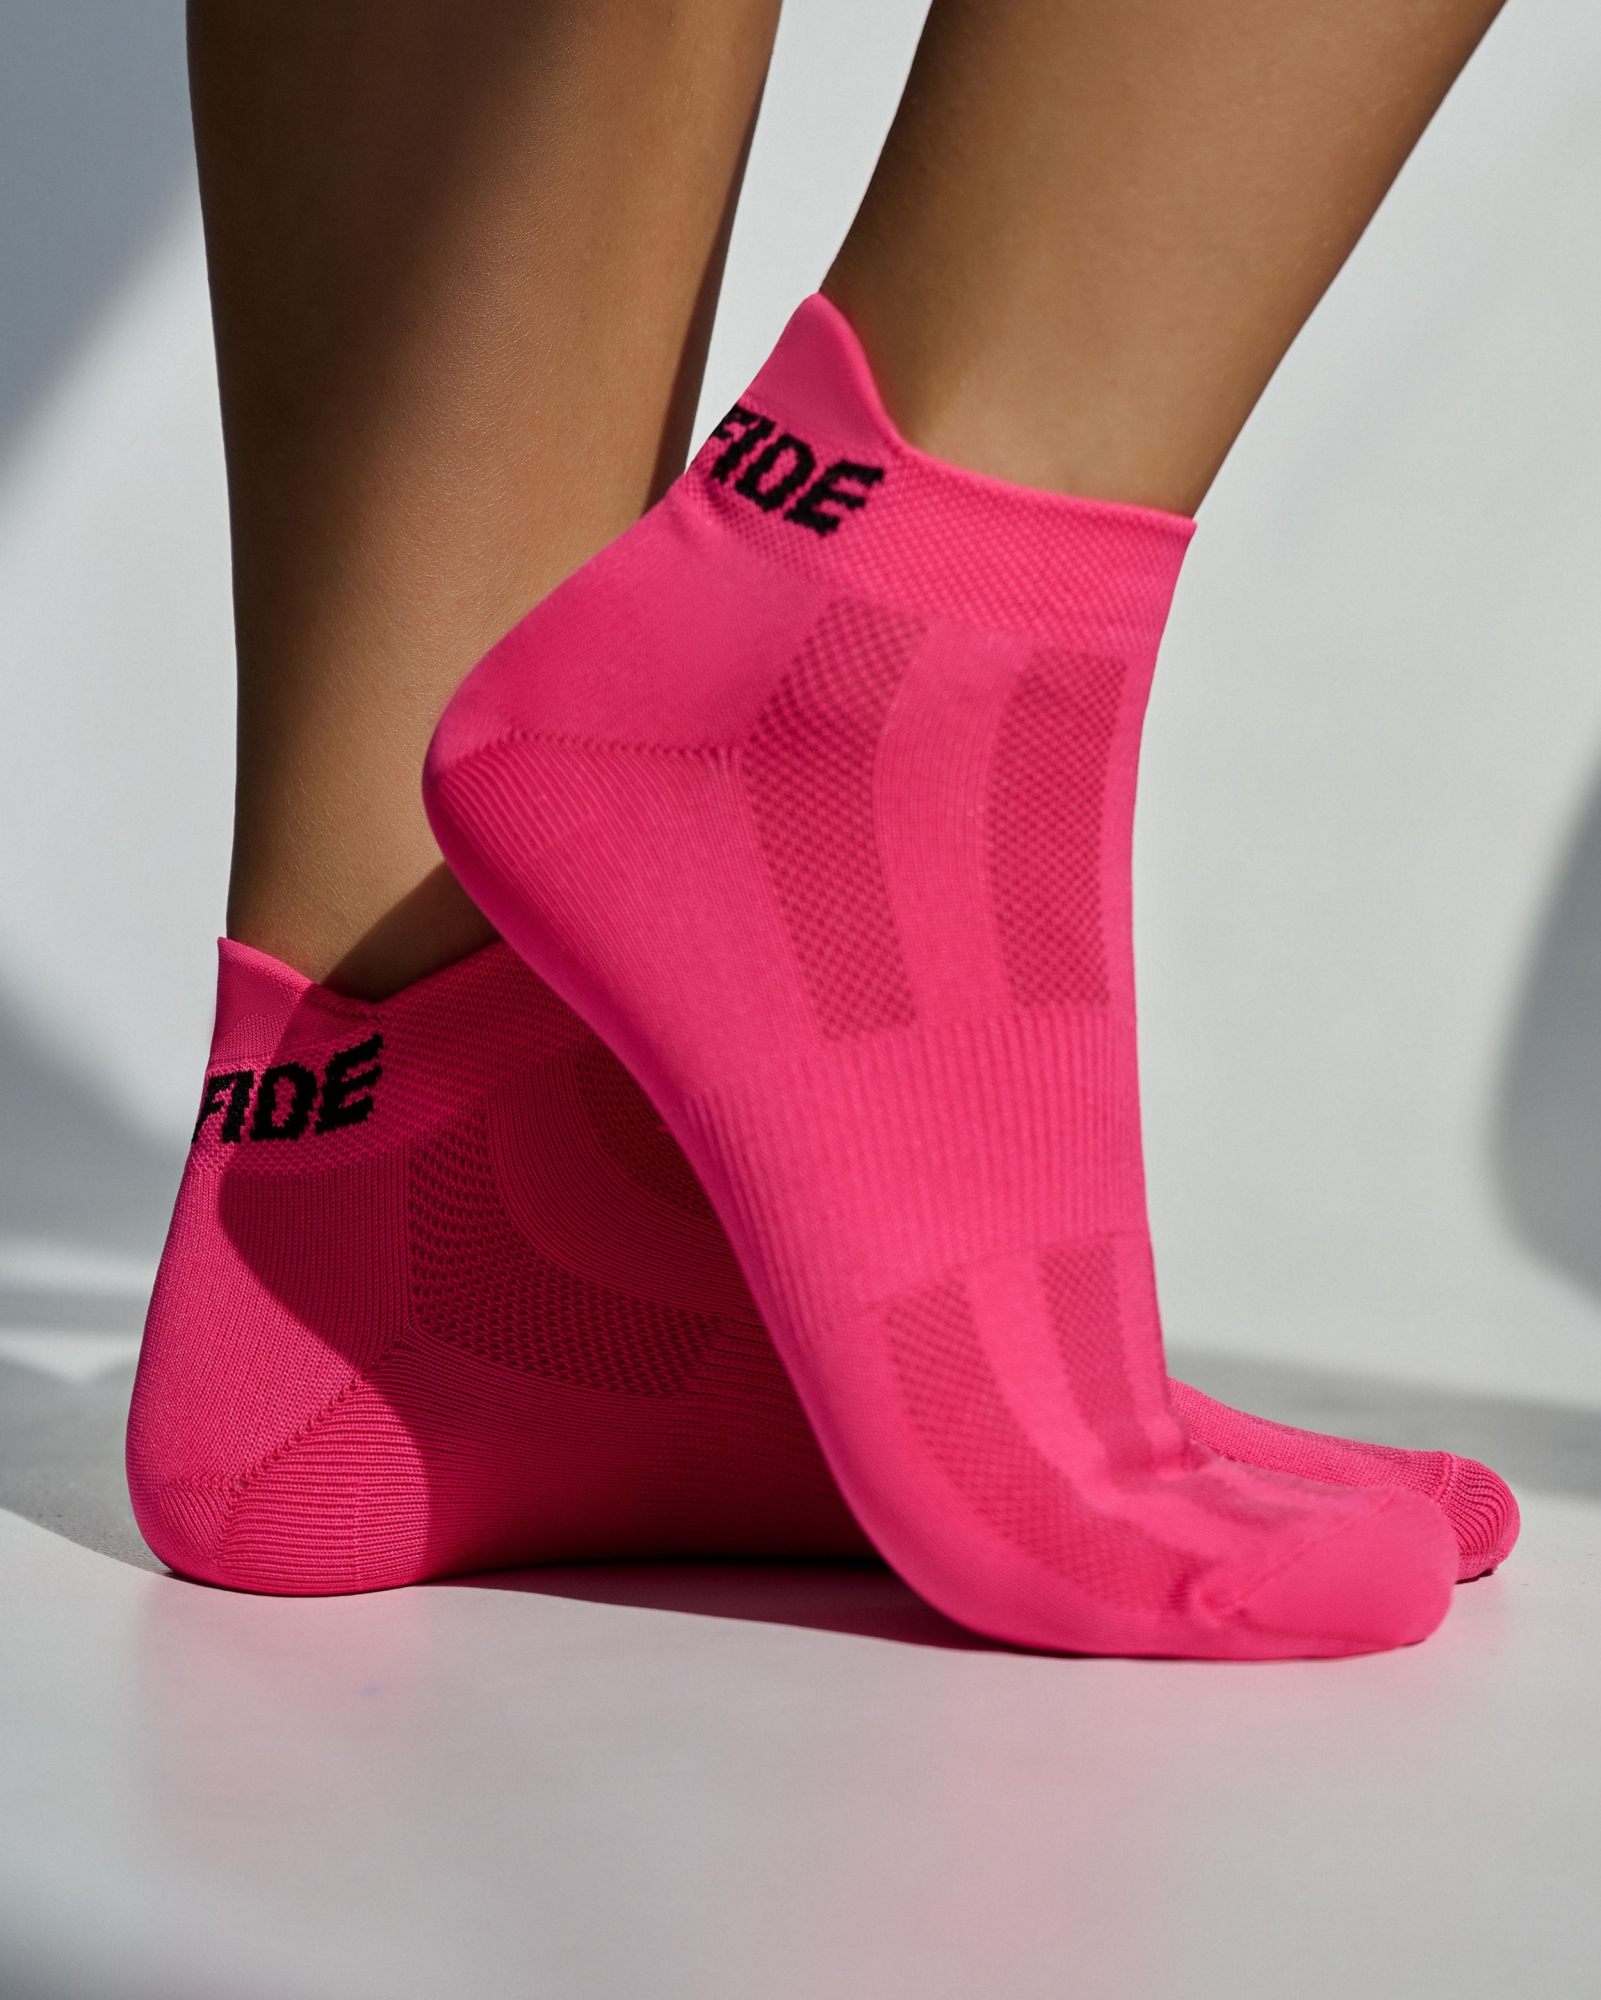 Bona Fide: Color Set of Socks(3 пары) фото 6